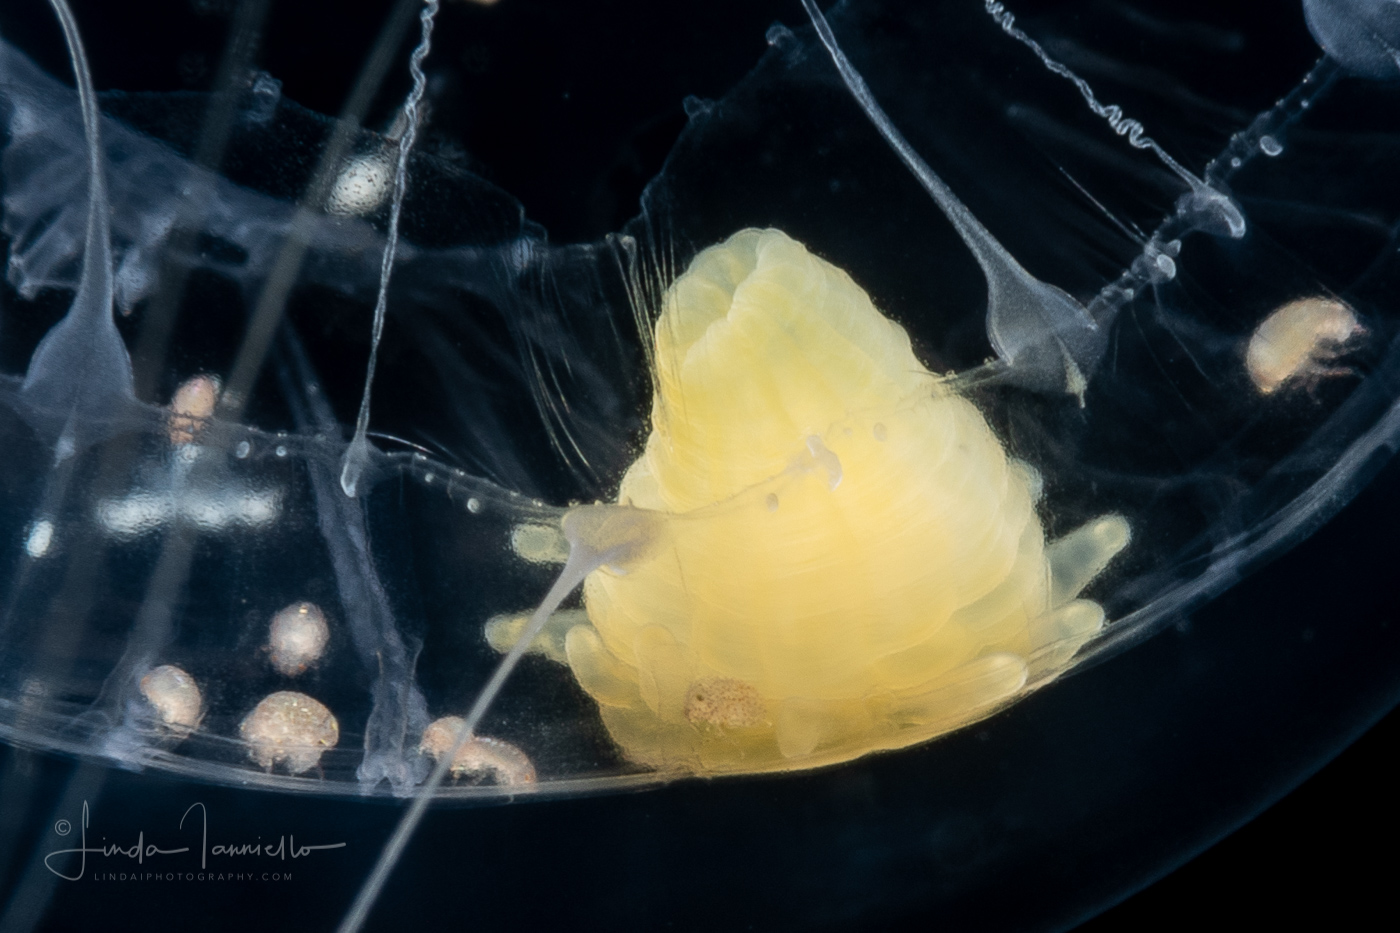 Anemone Larva that is parasitic on jellyfish - Peachia sp.